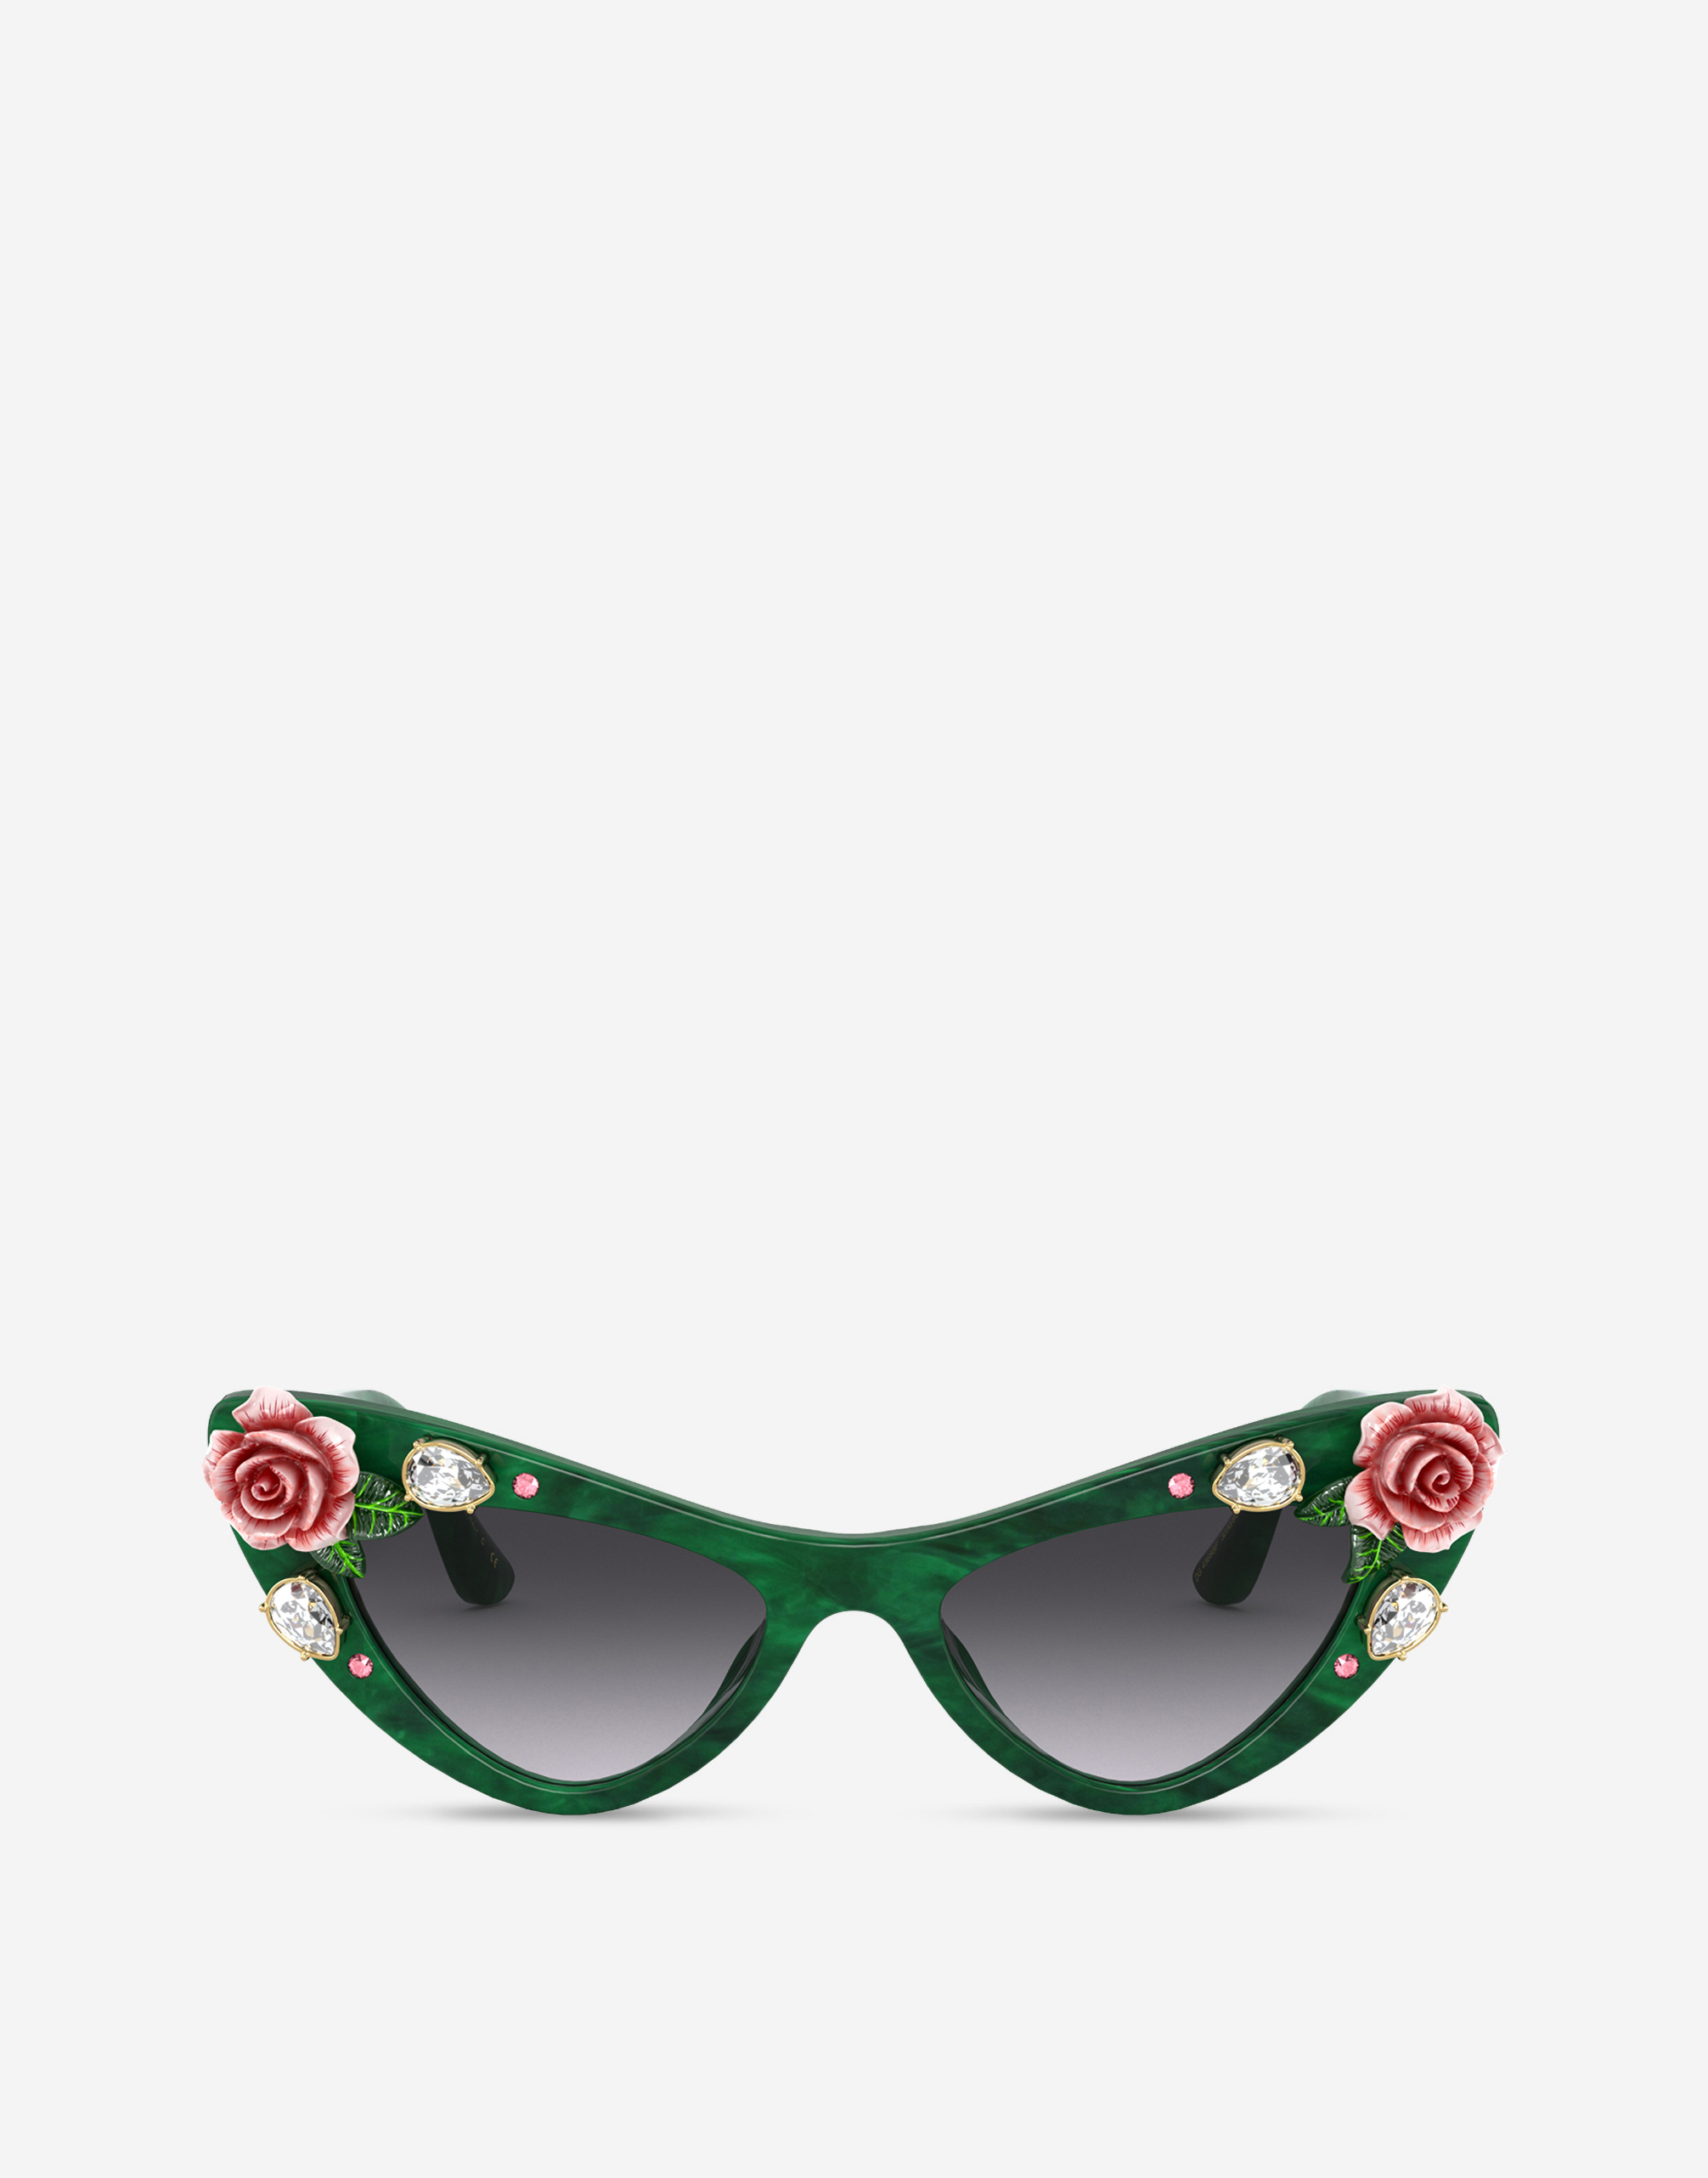 Tropical rose sunglasses